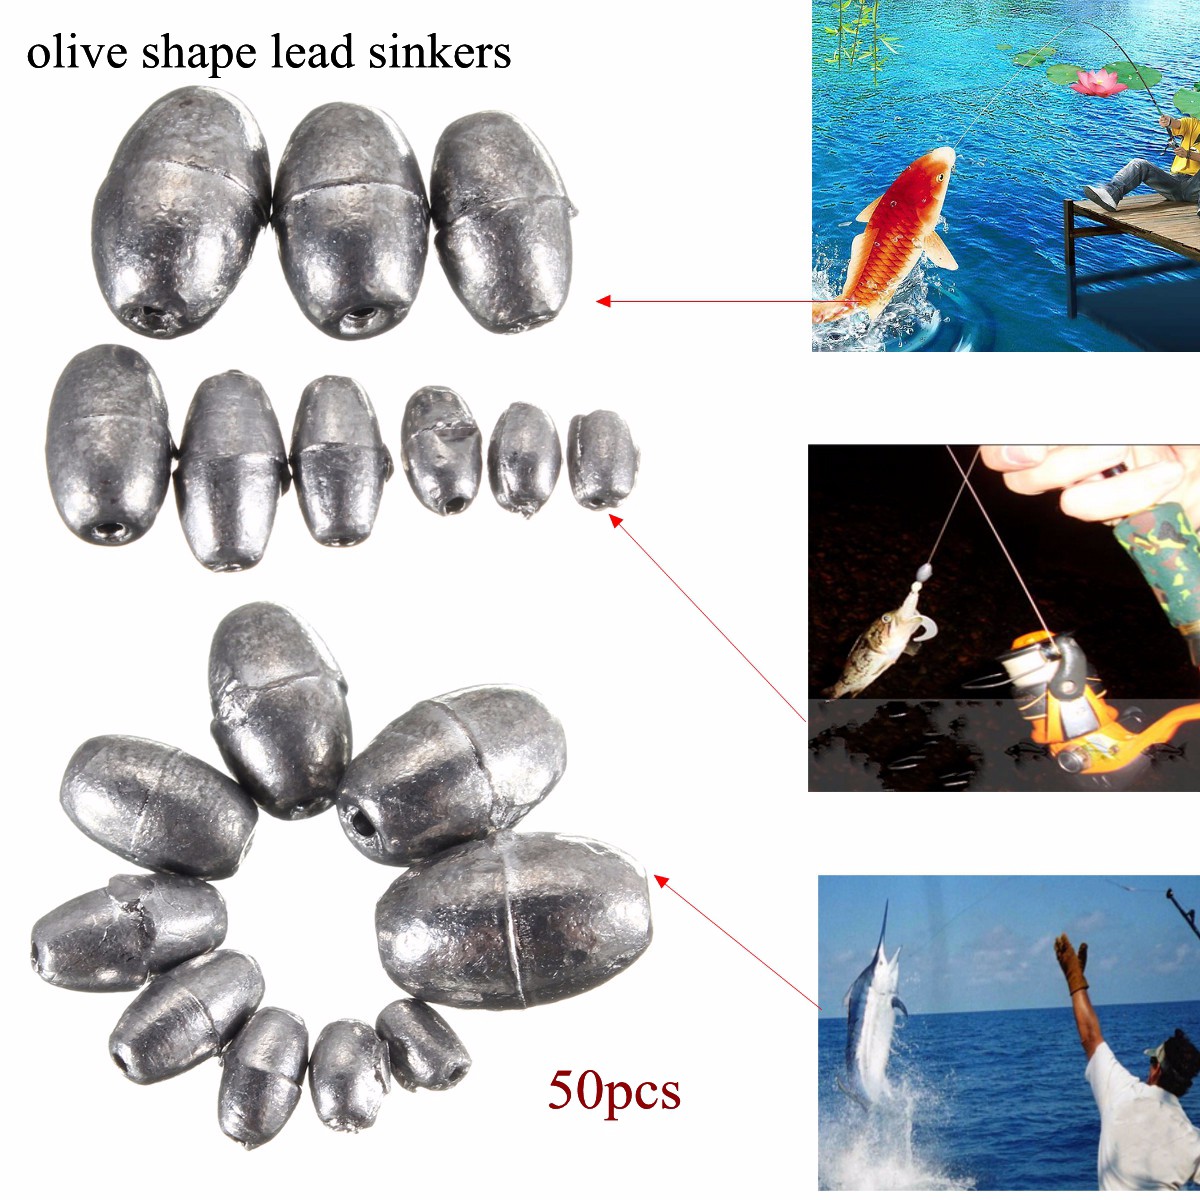 100PCS Olive Shape Weight Lead Sinkers Pure Lead Making Fishing Sinker Tackle 